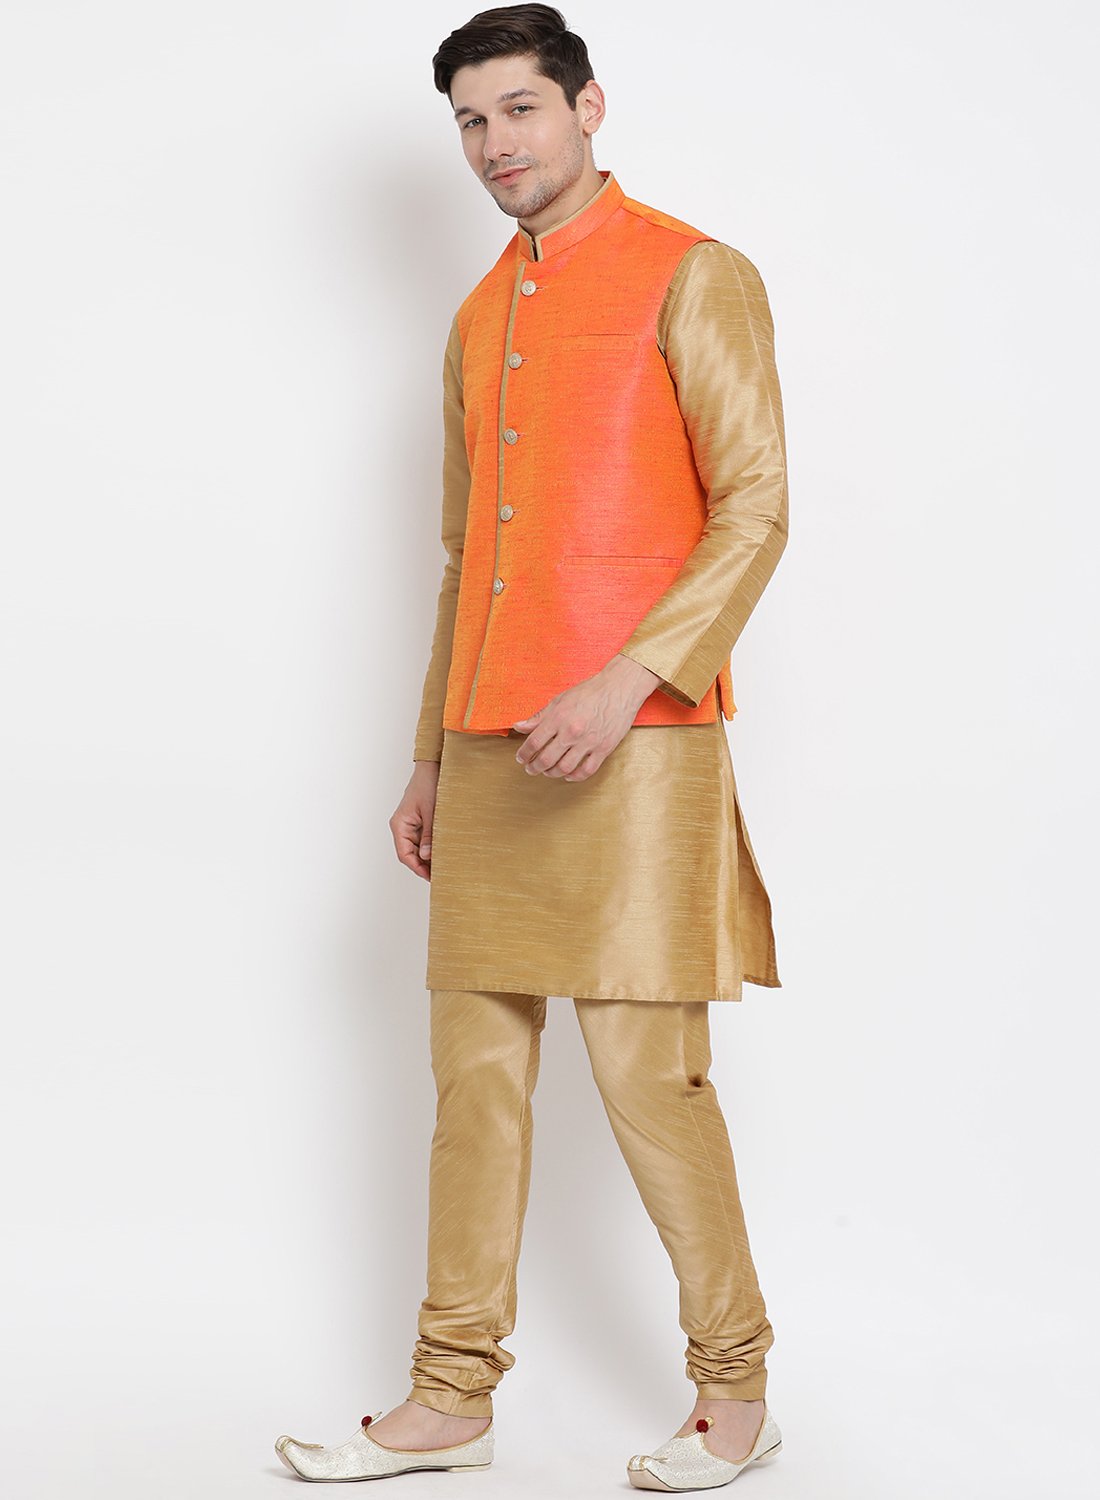 Men's Gold Cotton Silk Blend Kurta, Ethnic Jacket and Pyjama Set